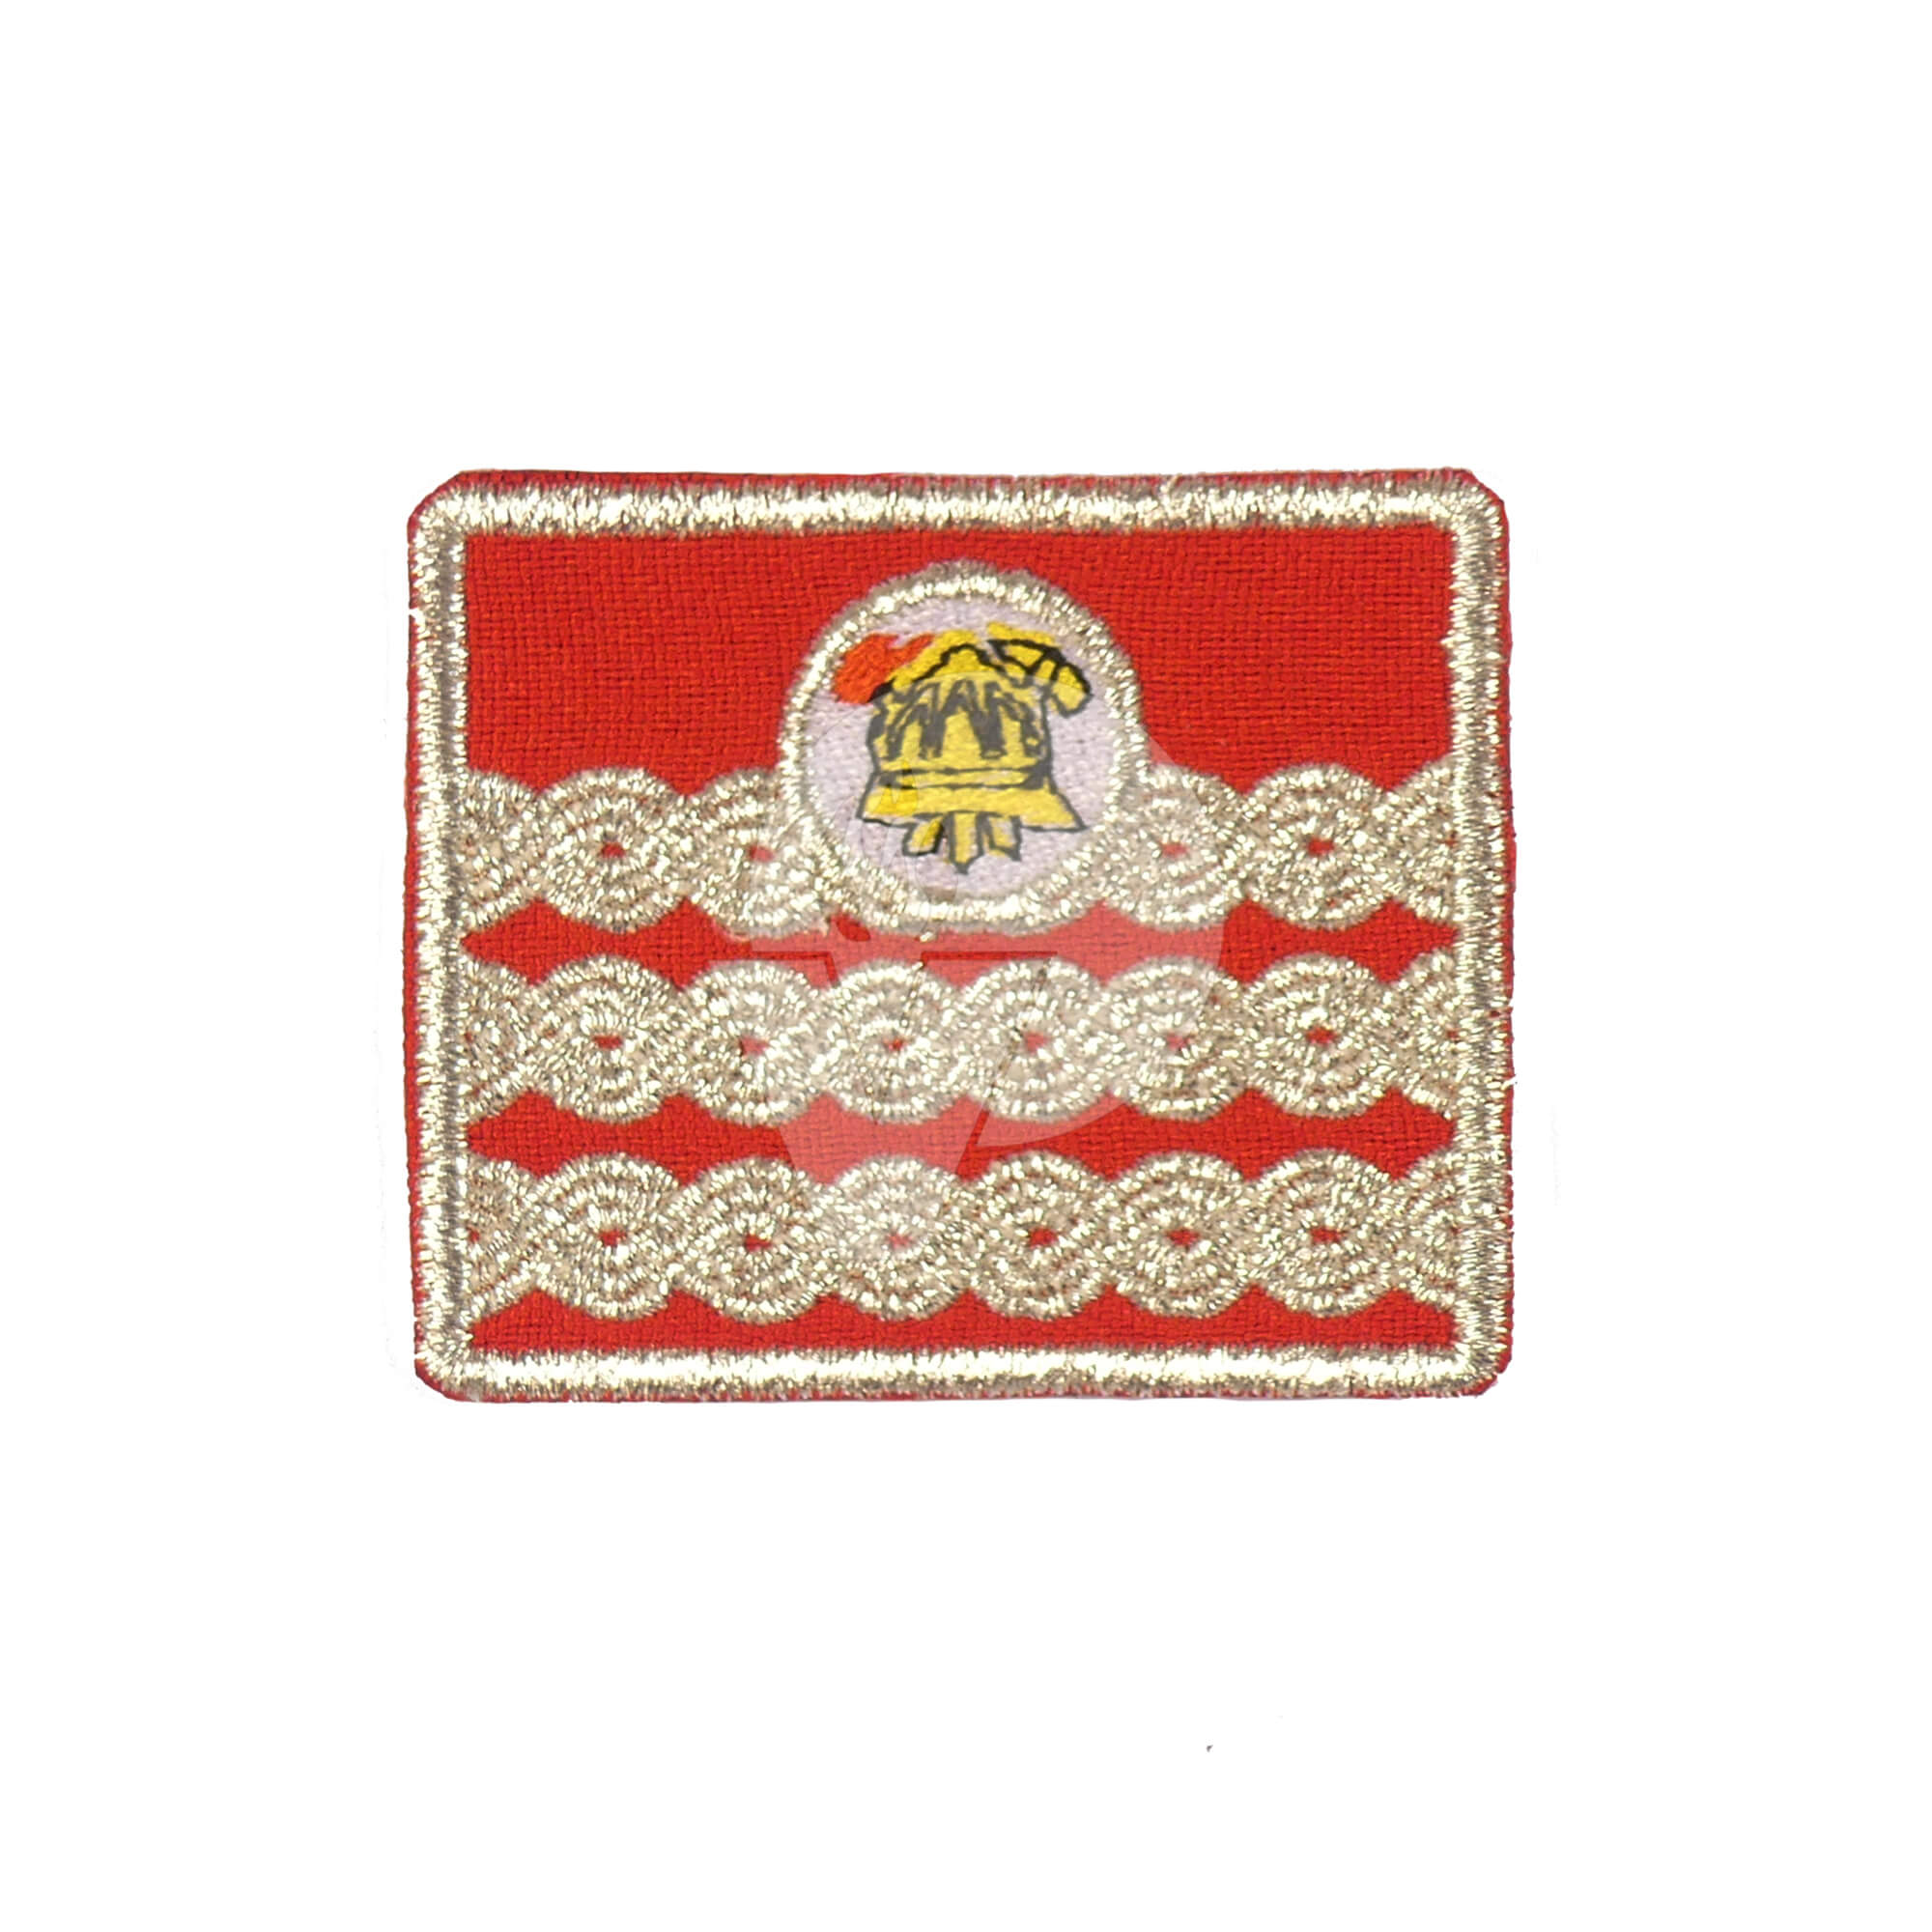 Firefighter Emblem for Work Suit, County Commander